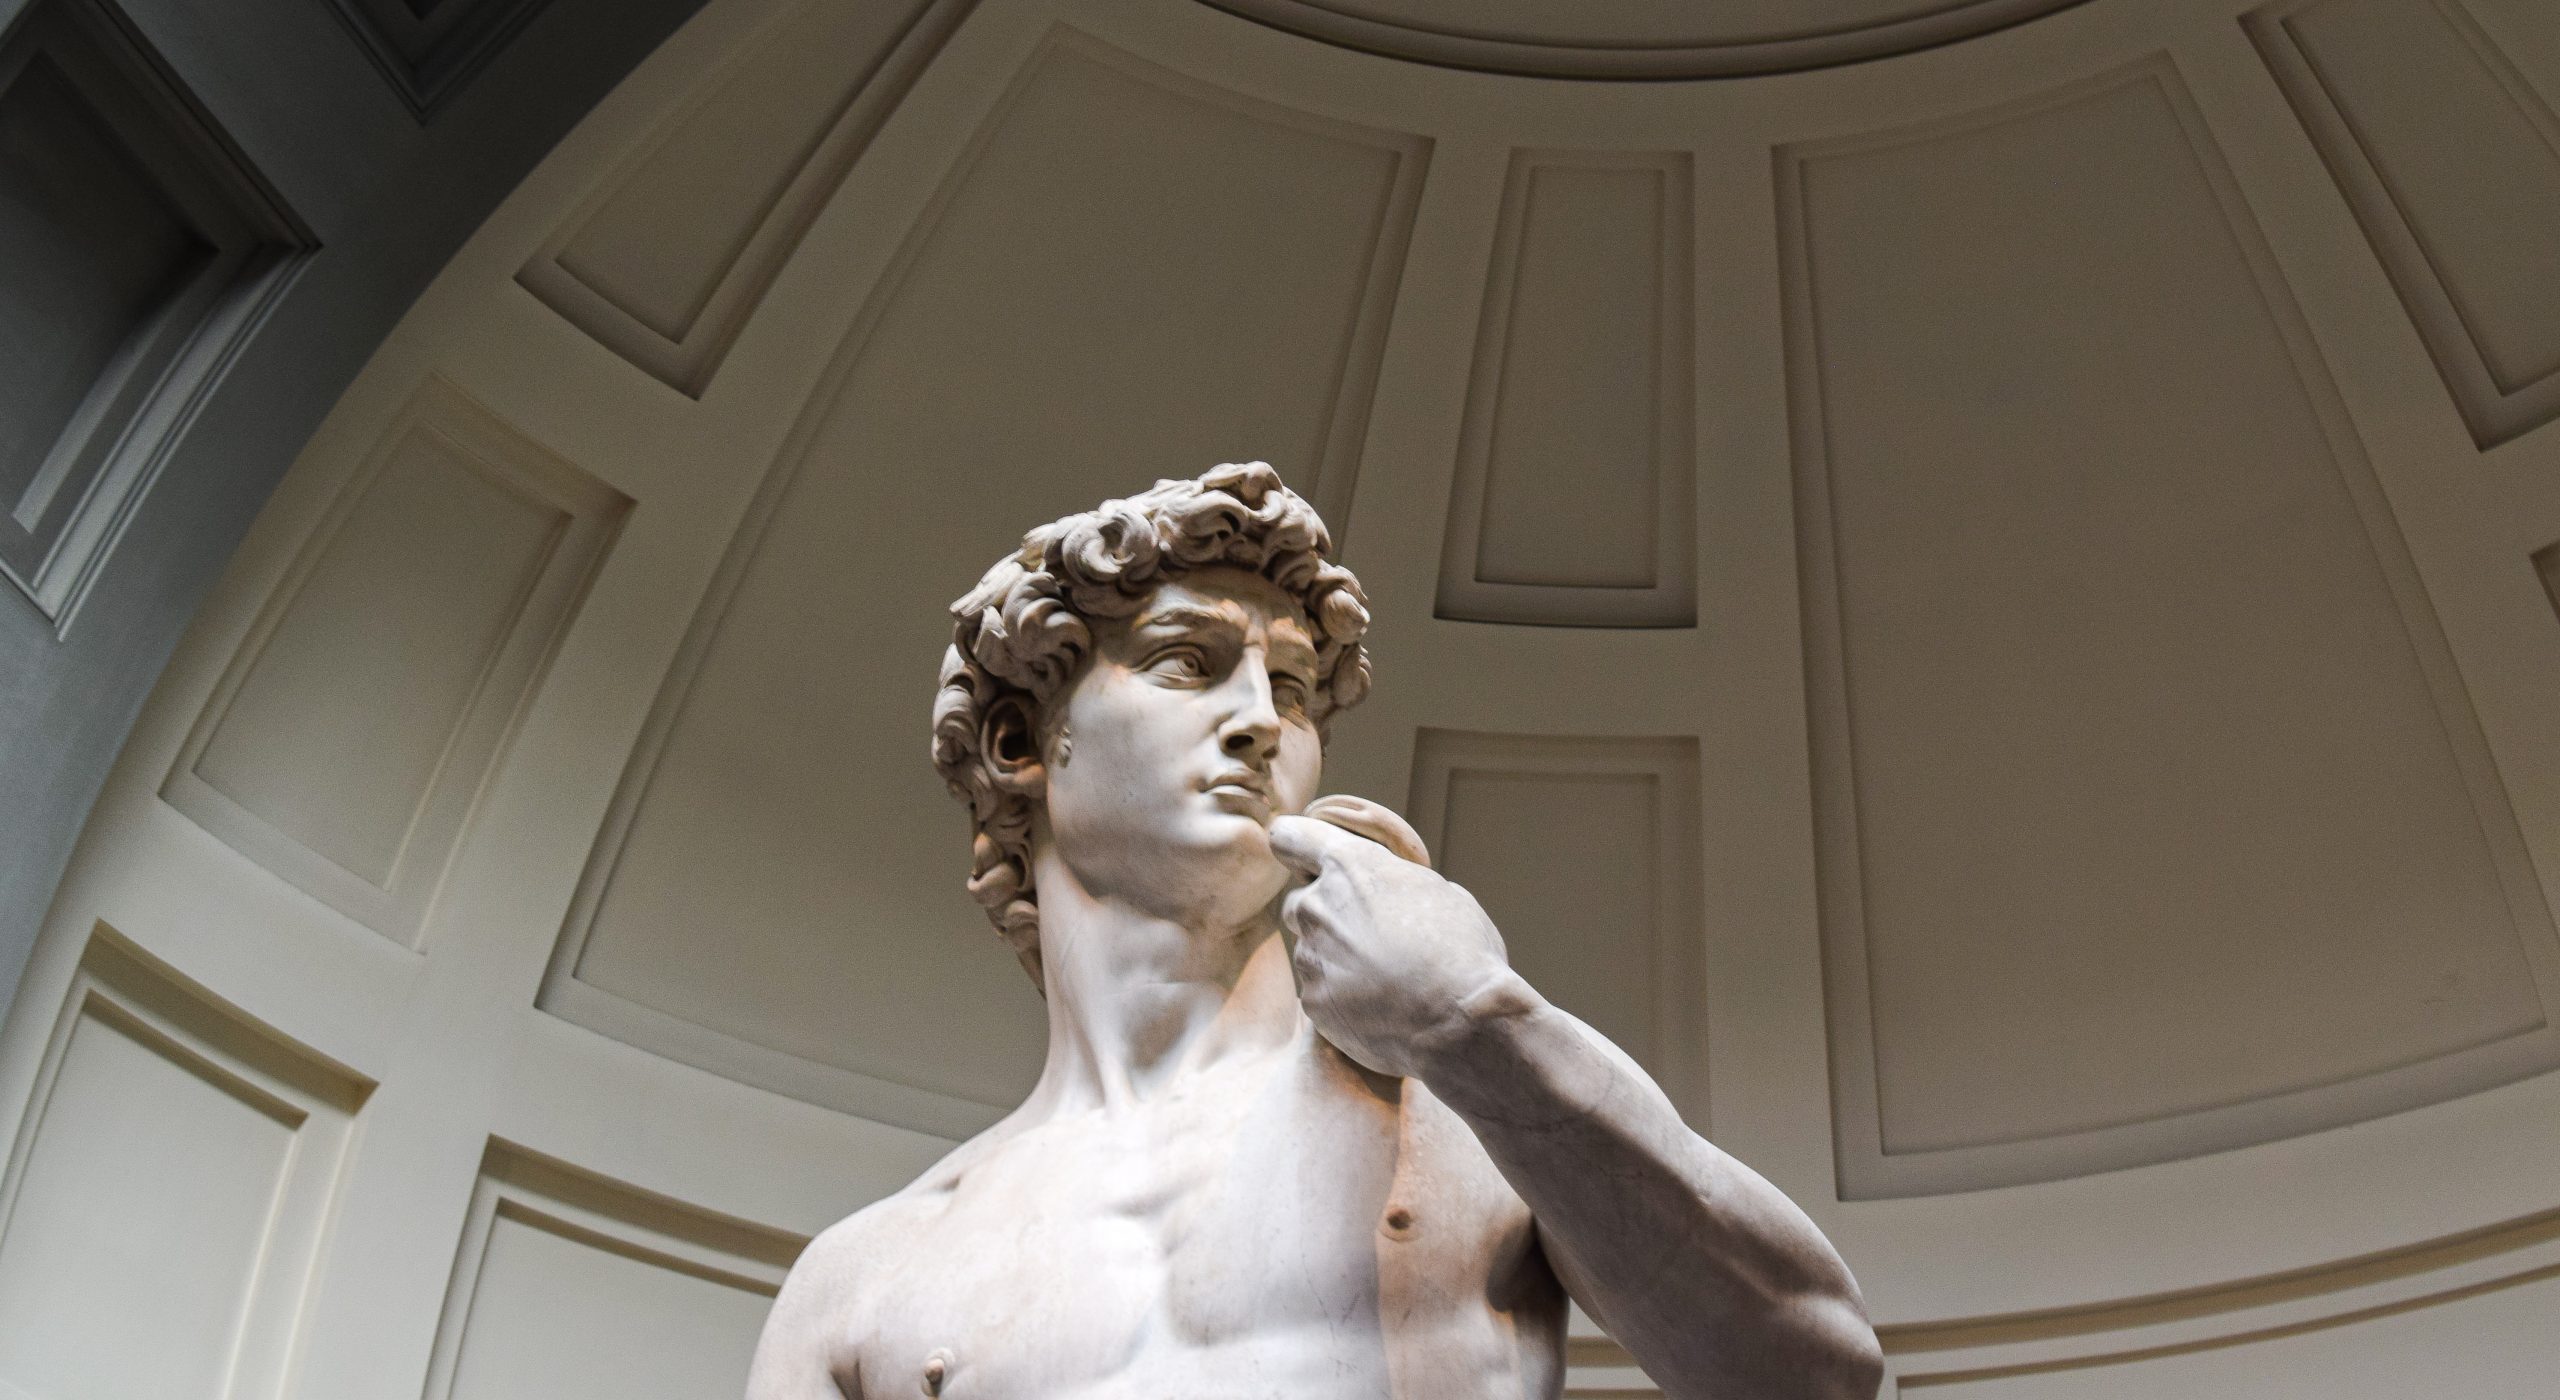 Nvidia Neuralangelo is based on Michelangelo's sculpting skills.